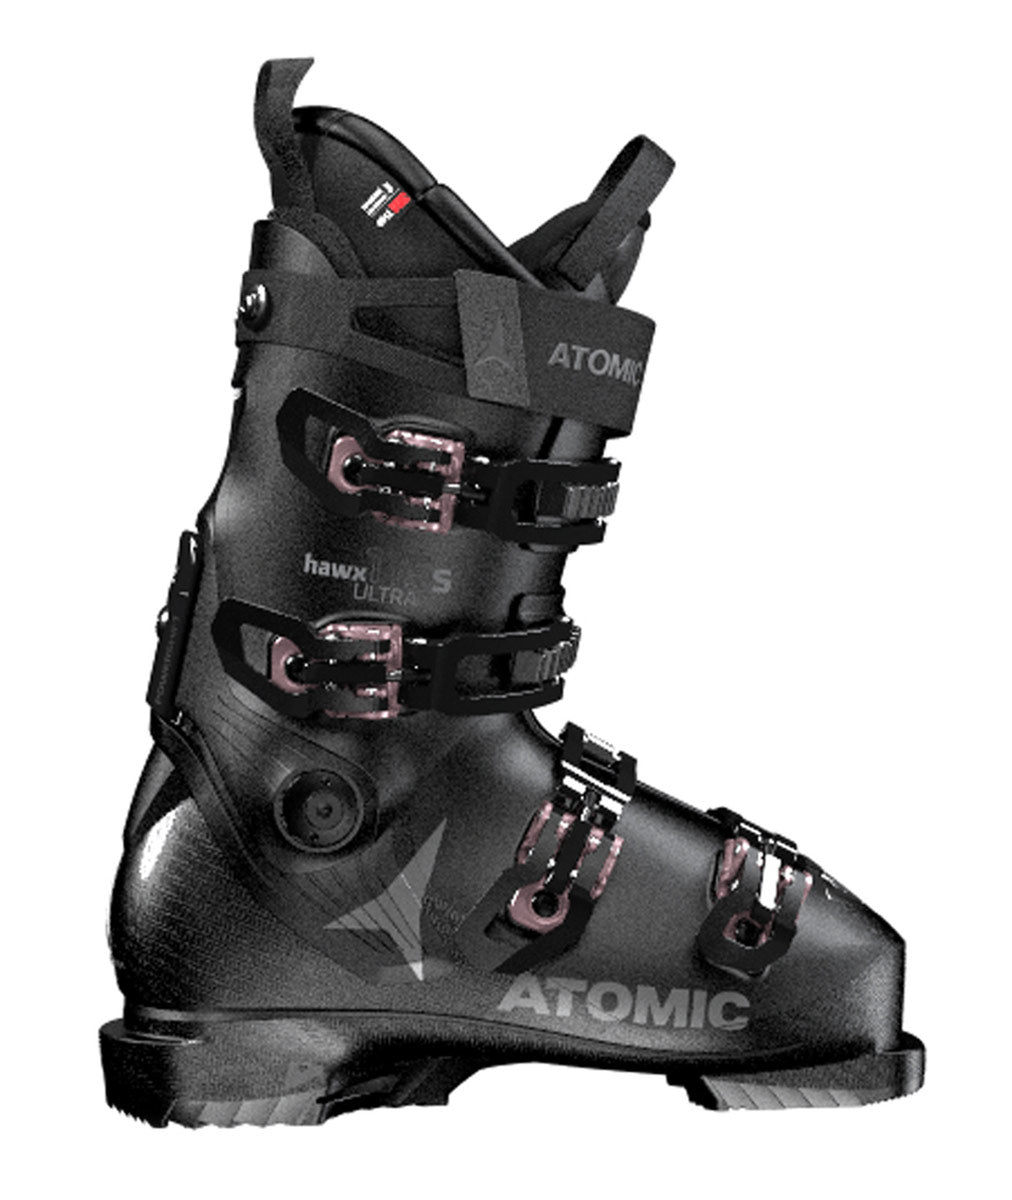 Atomic Hawx Prime XTD 115 CT GW Alpine Touring Ski Boots - Women's 202